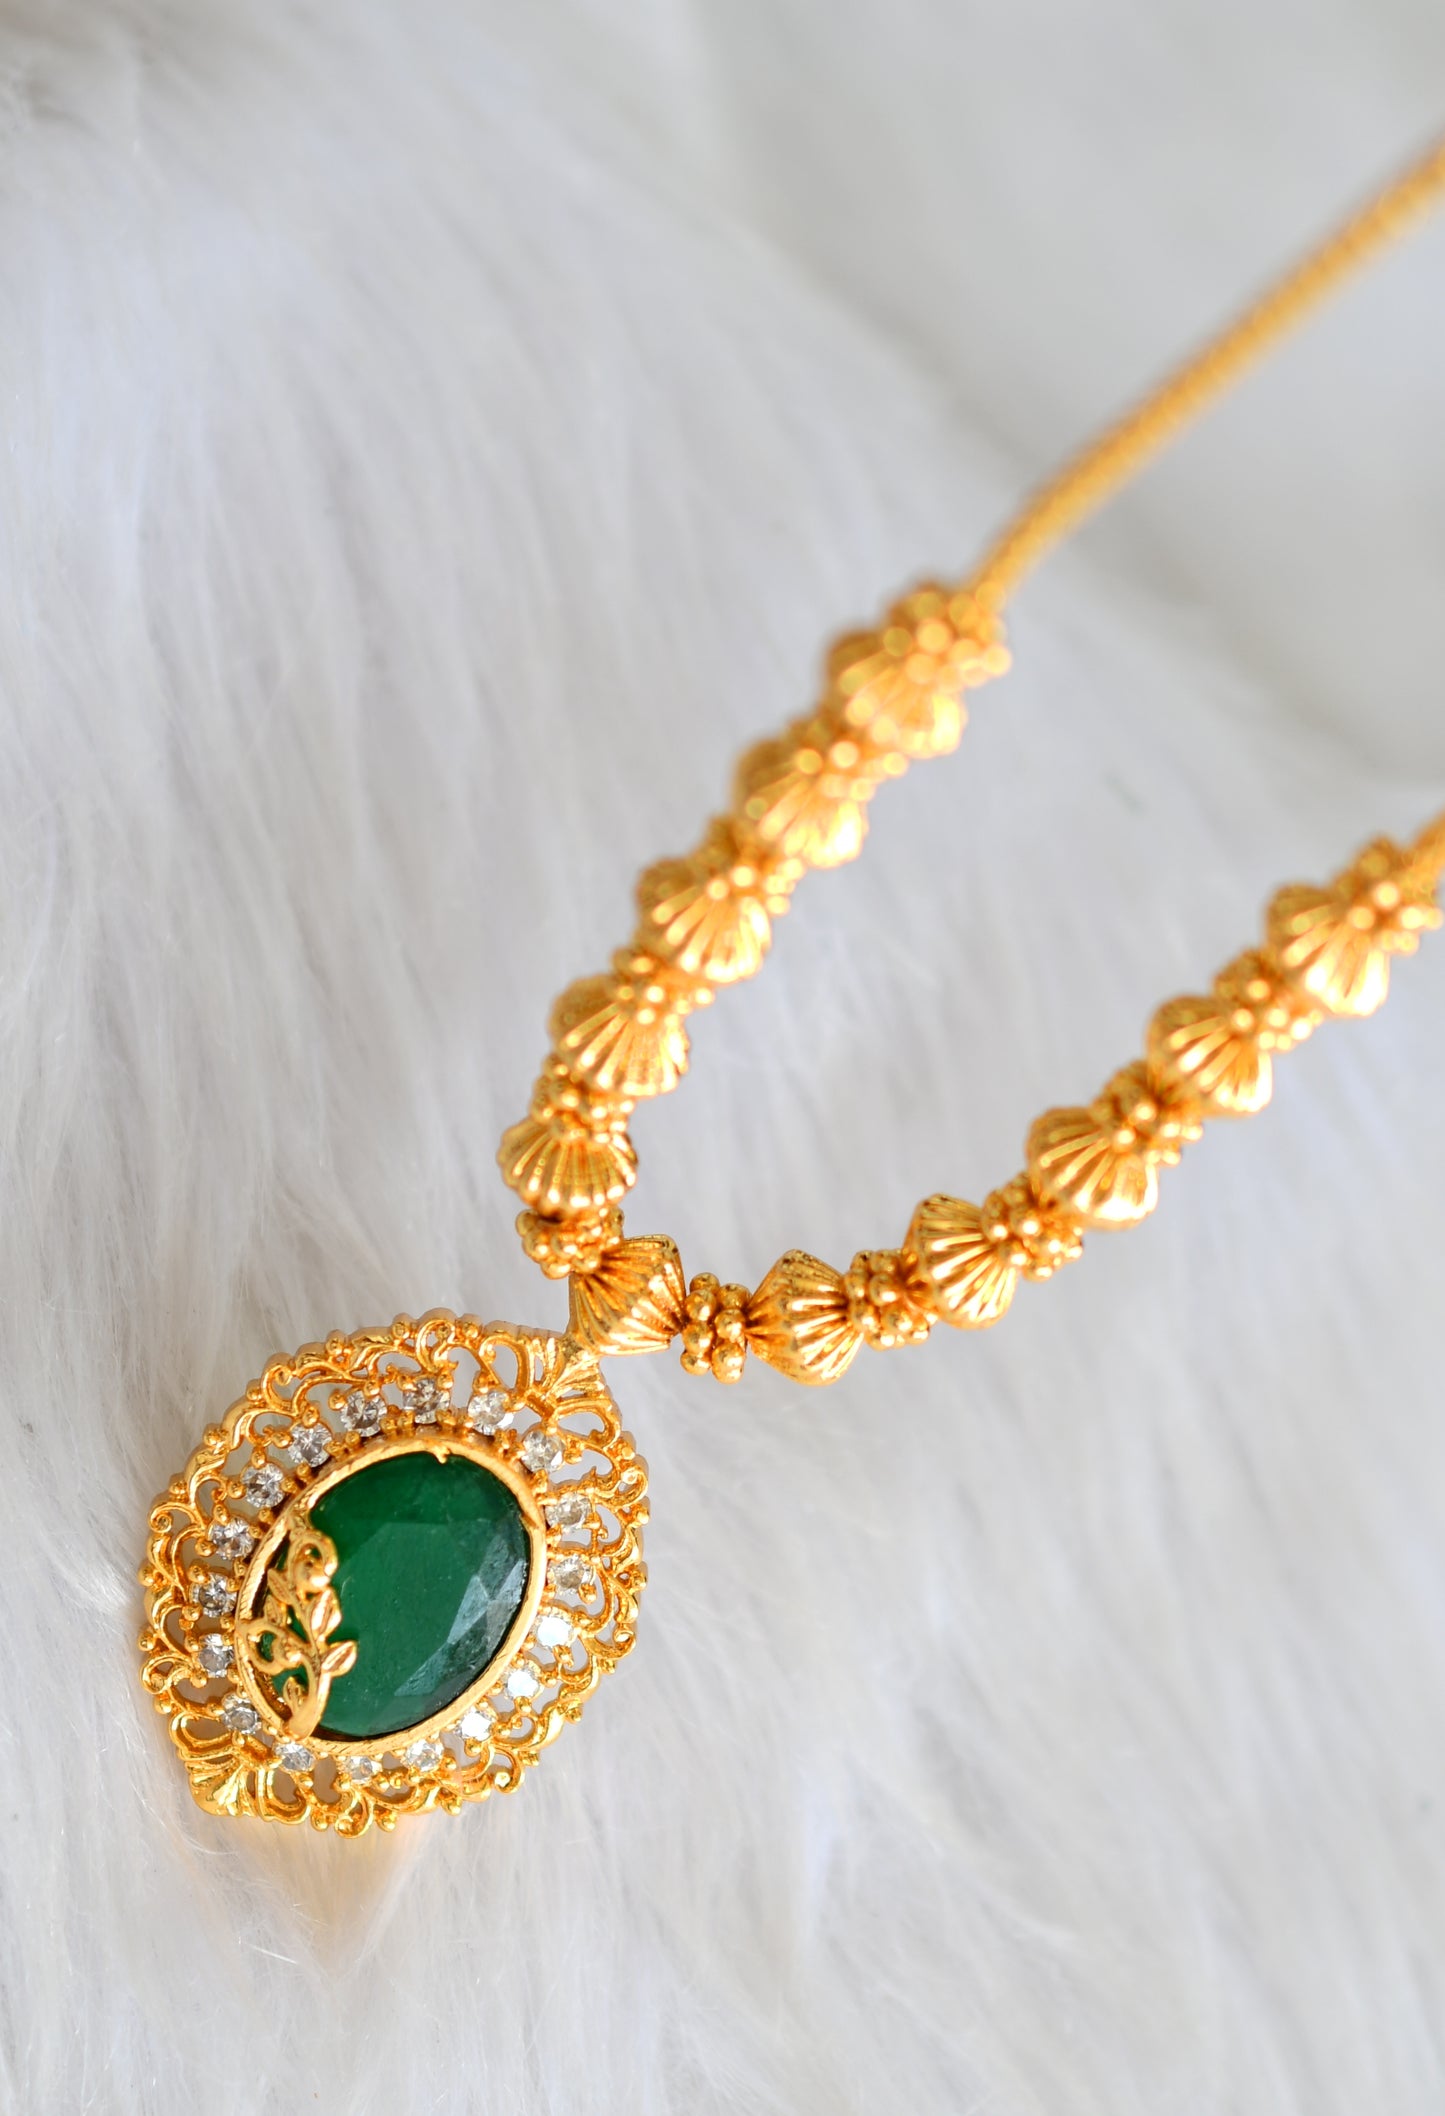 Gold tone cz white-green oval necklace dj-43264